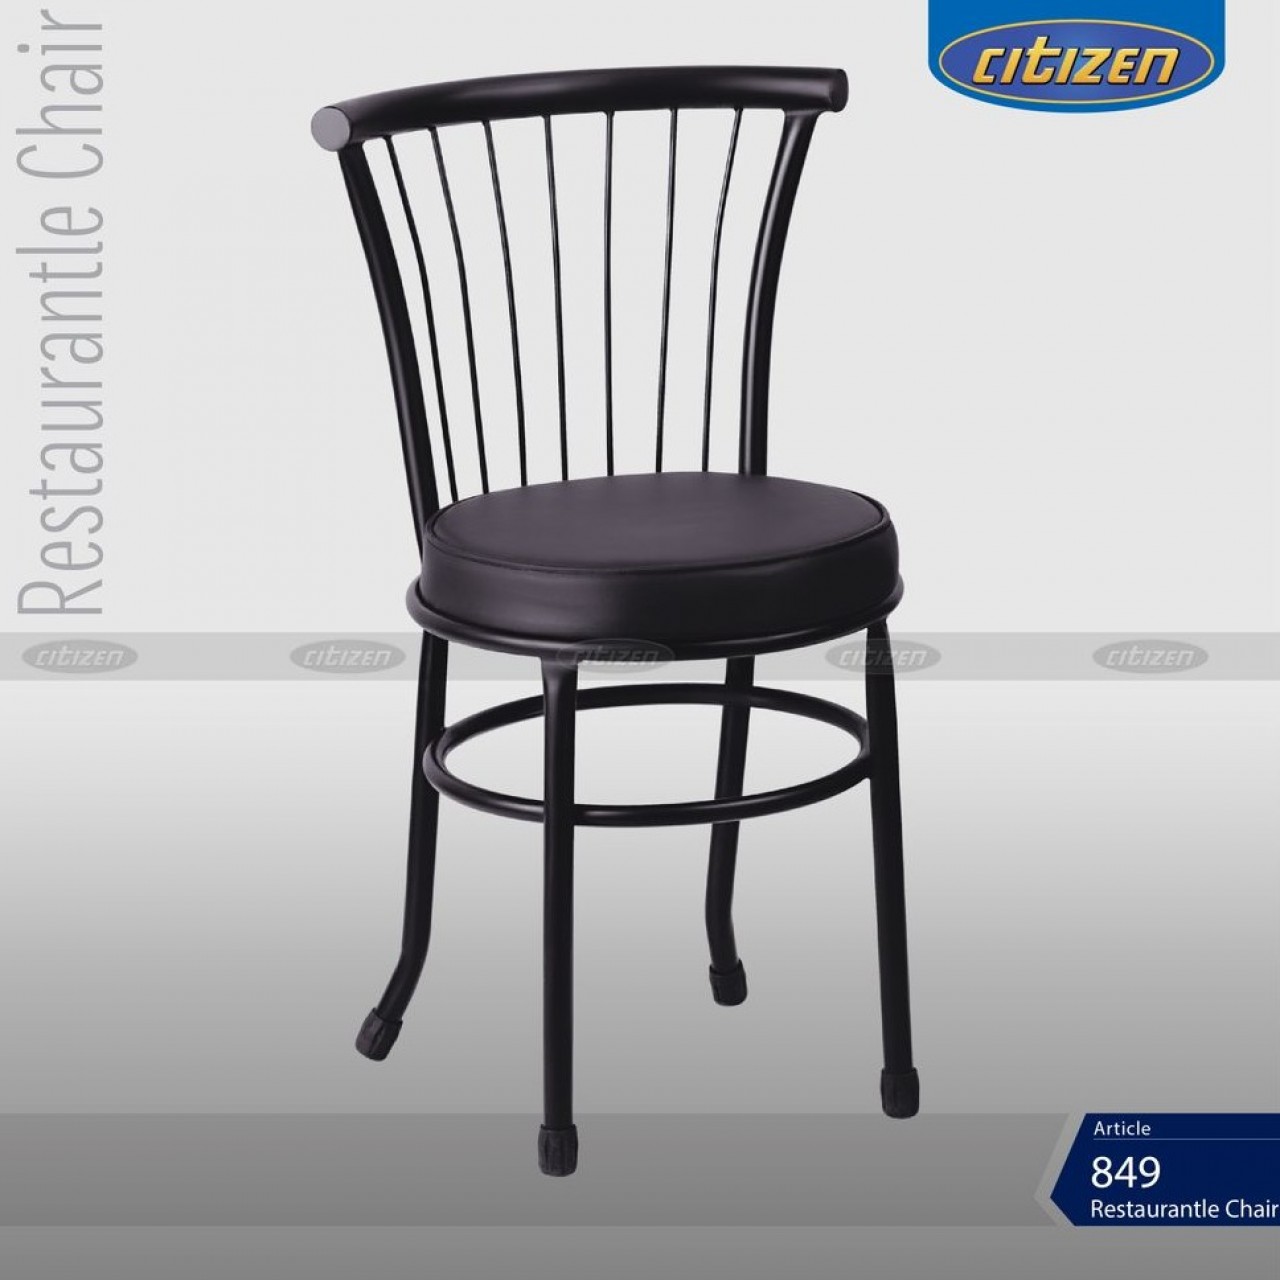 Citizen 849 A Steel Chair Furniture For Kitchen Home Sale Price Buy Online In Pakistan Faroshpk